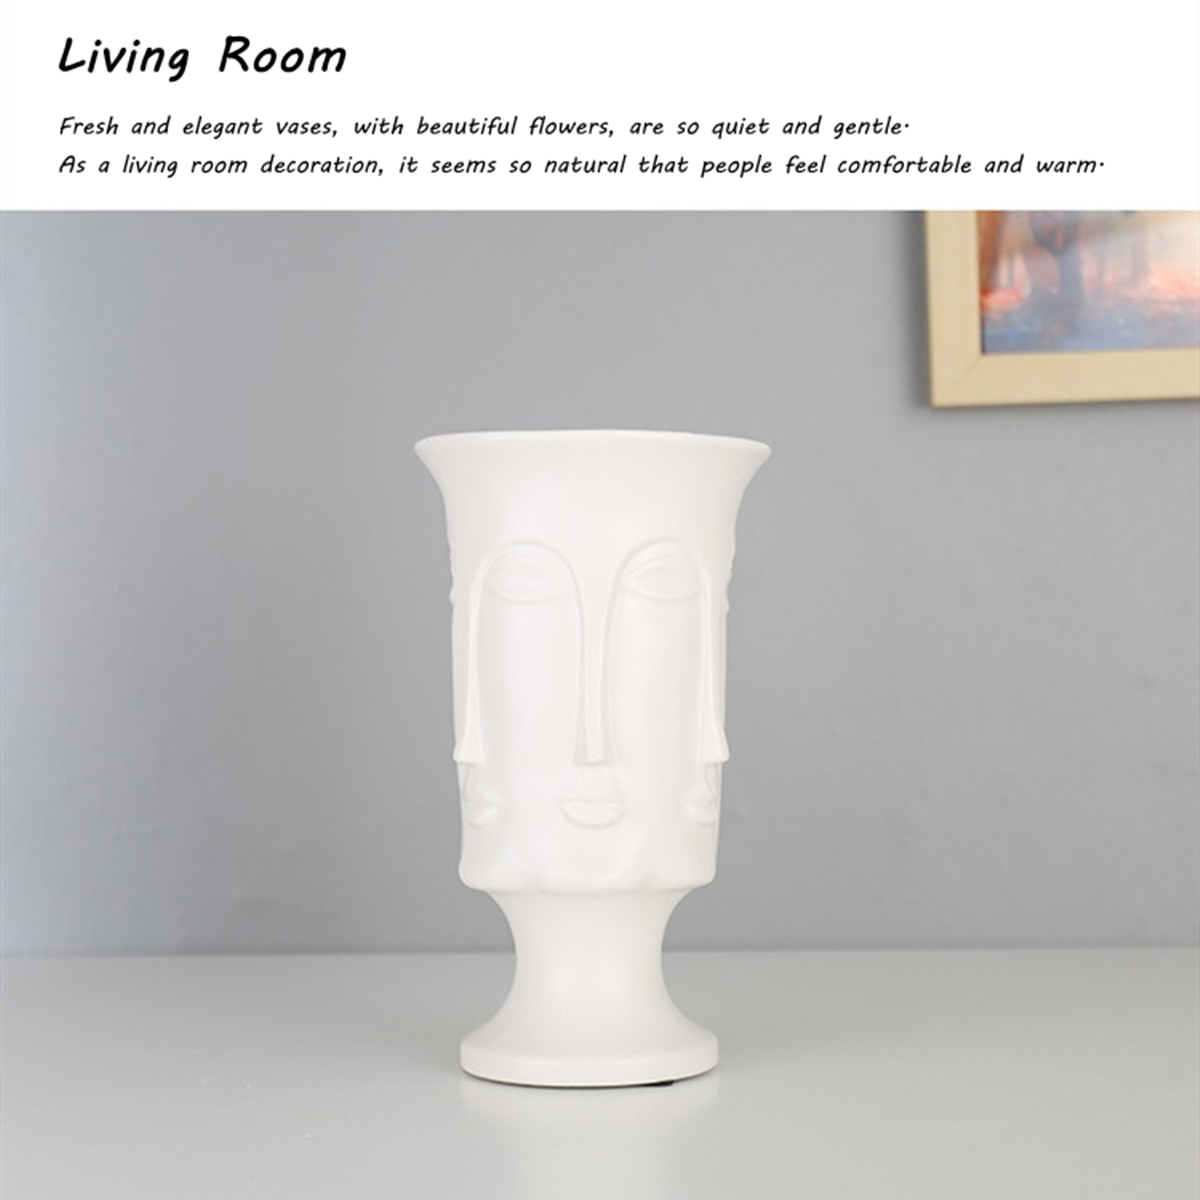 Minimalist-Artificial-Flower-Ceramic-Human-Face-Creative-Vase-Display-Room-Decorations-1473220-3